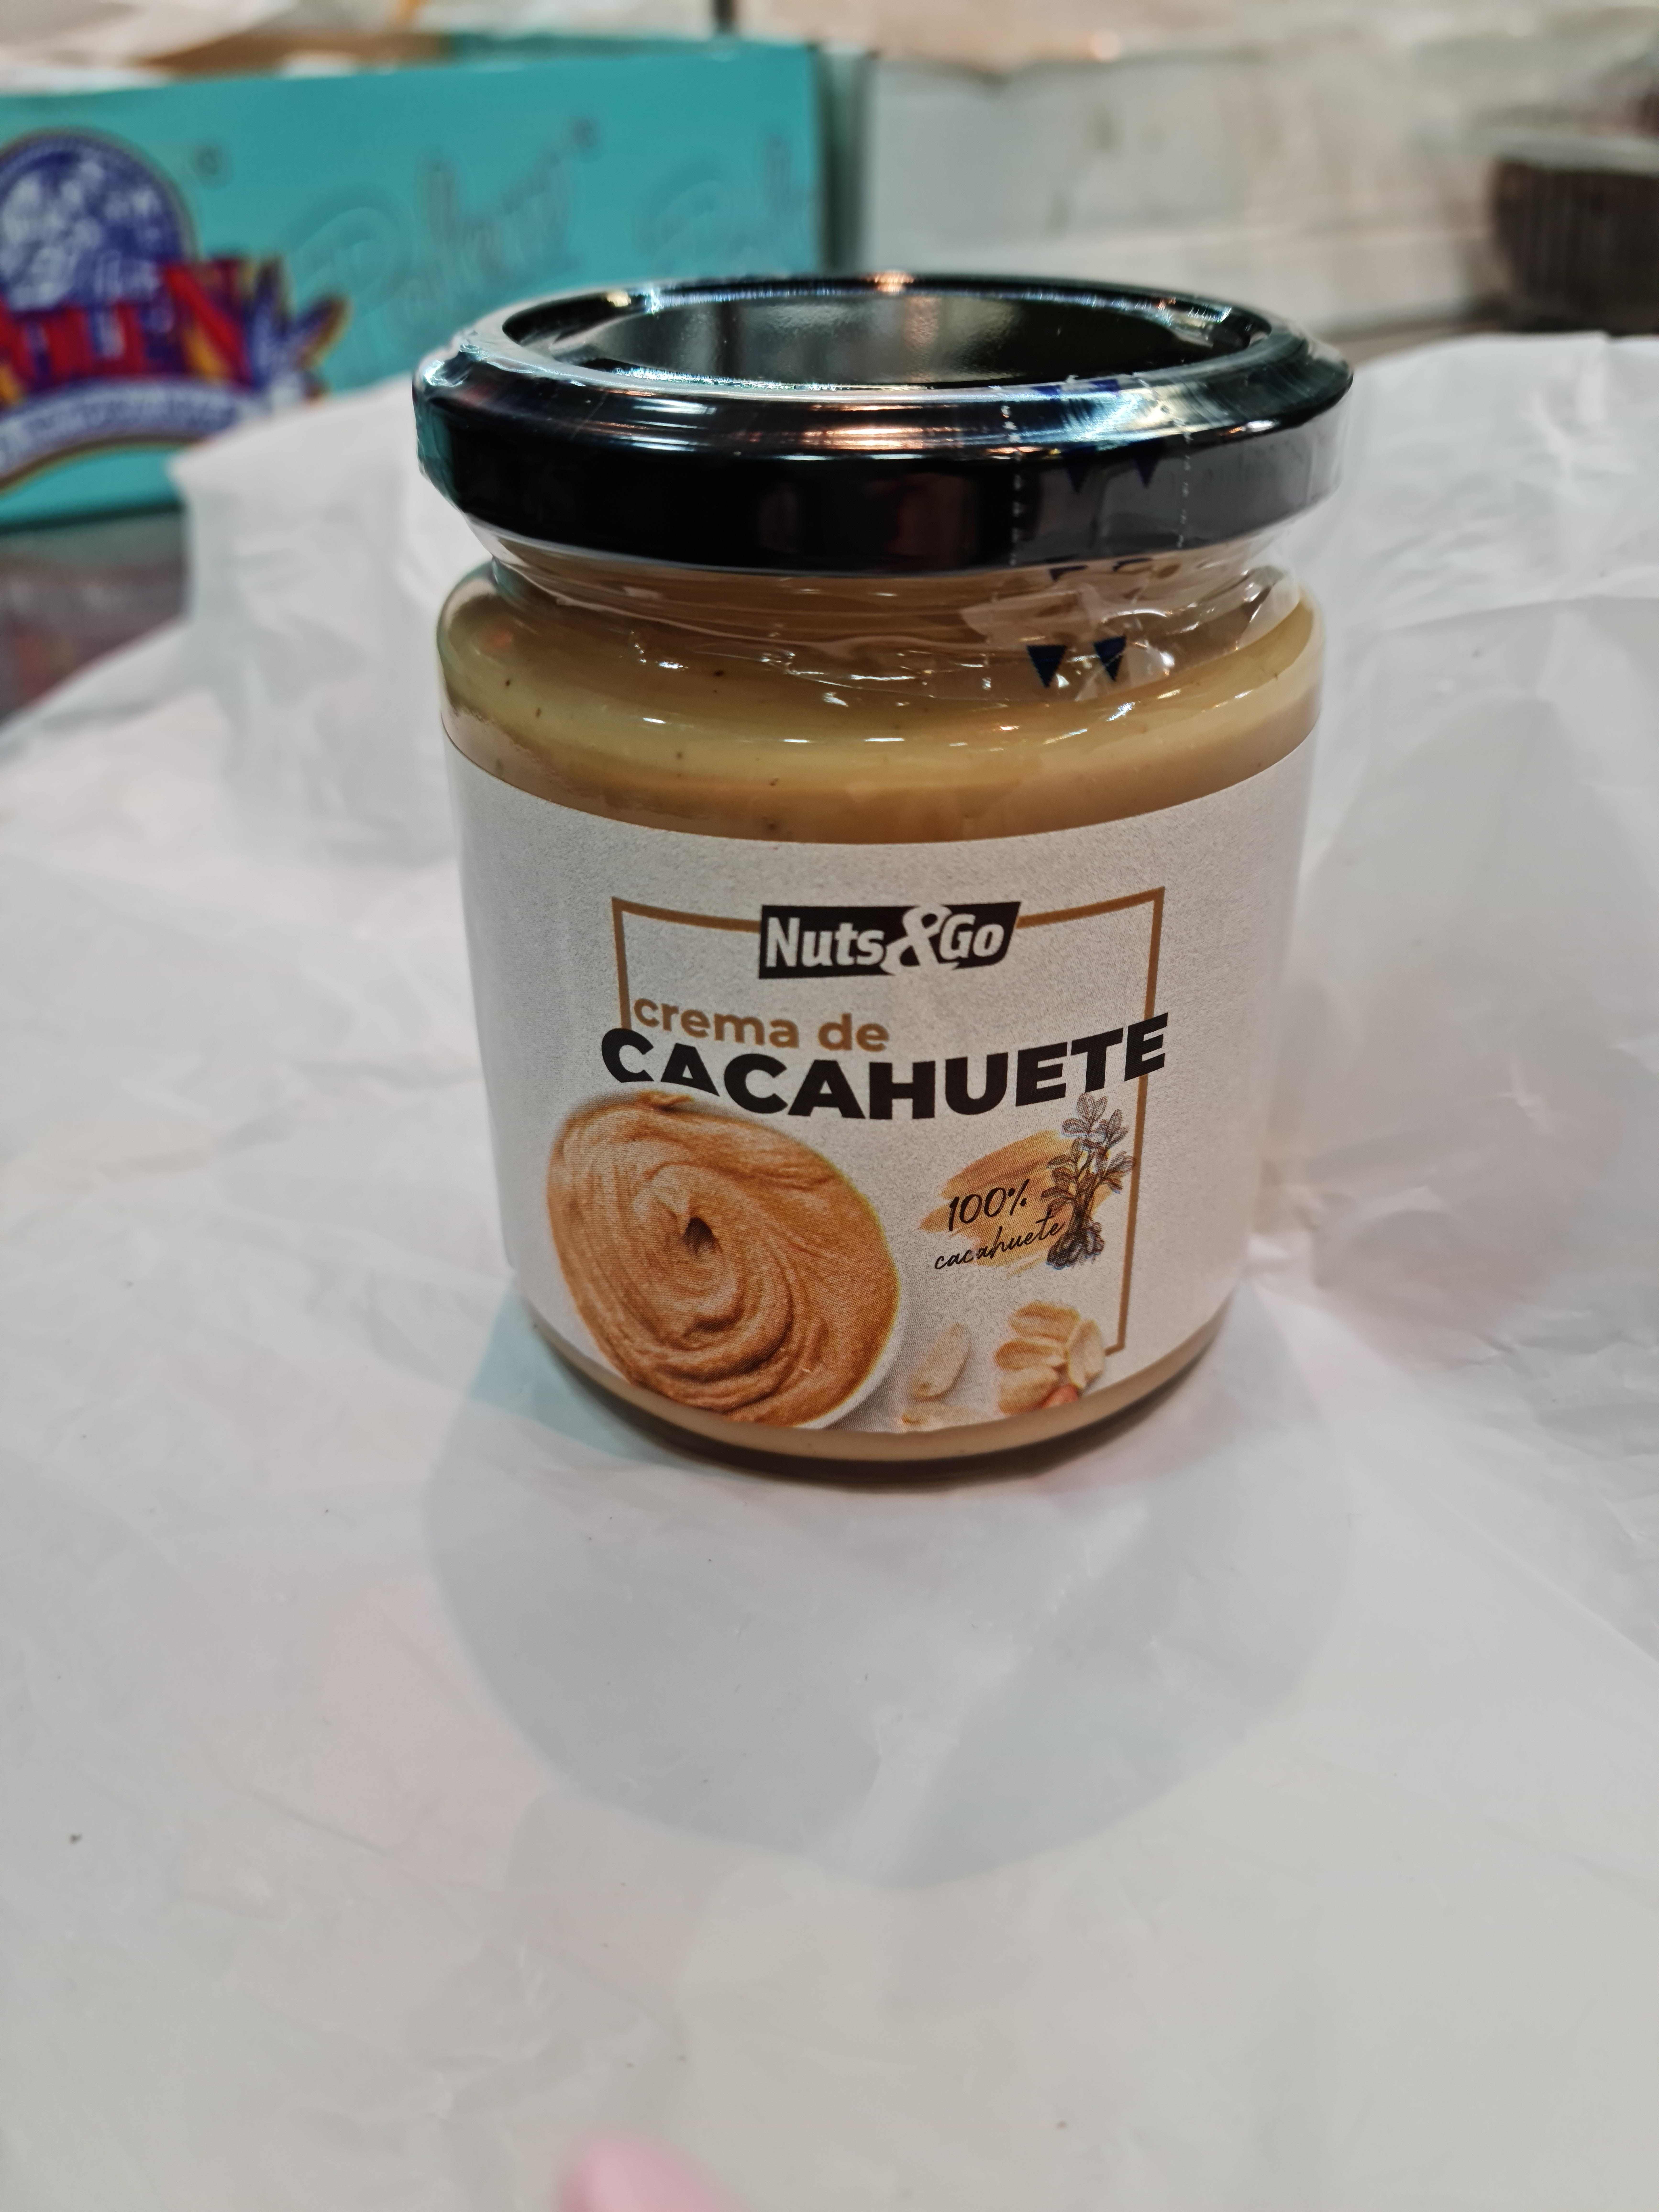 Nuts&go - Crema de cacahuete